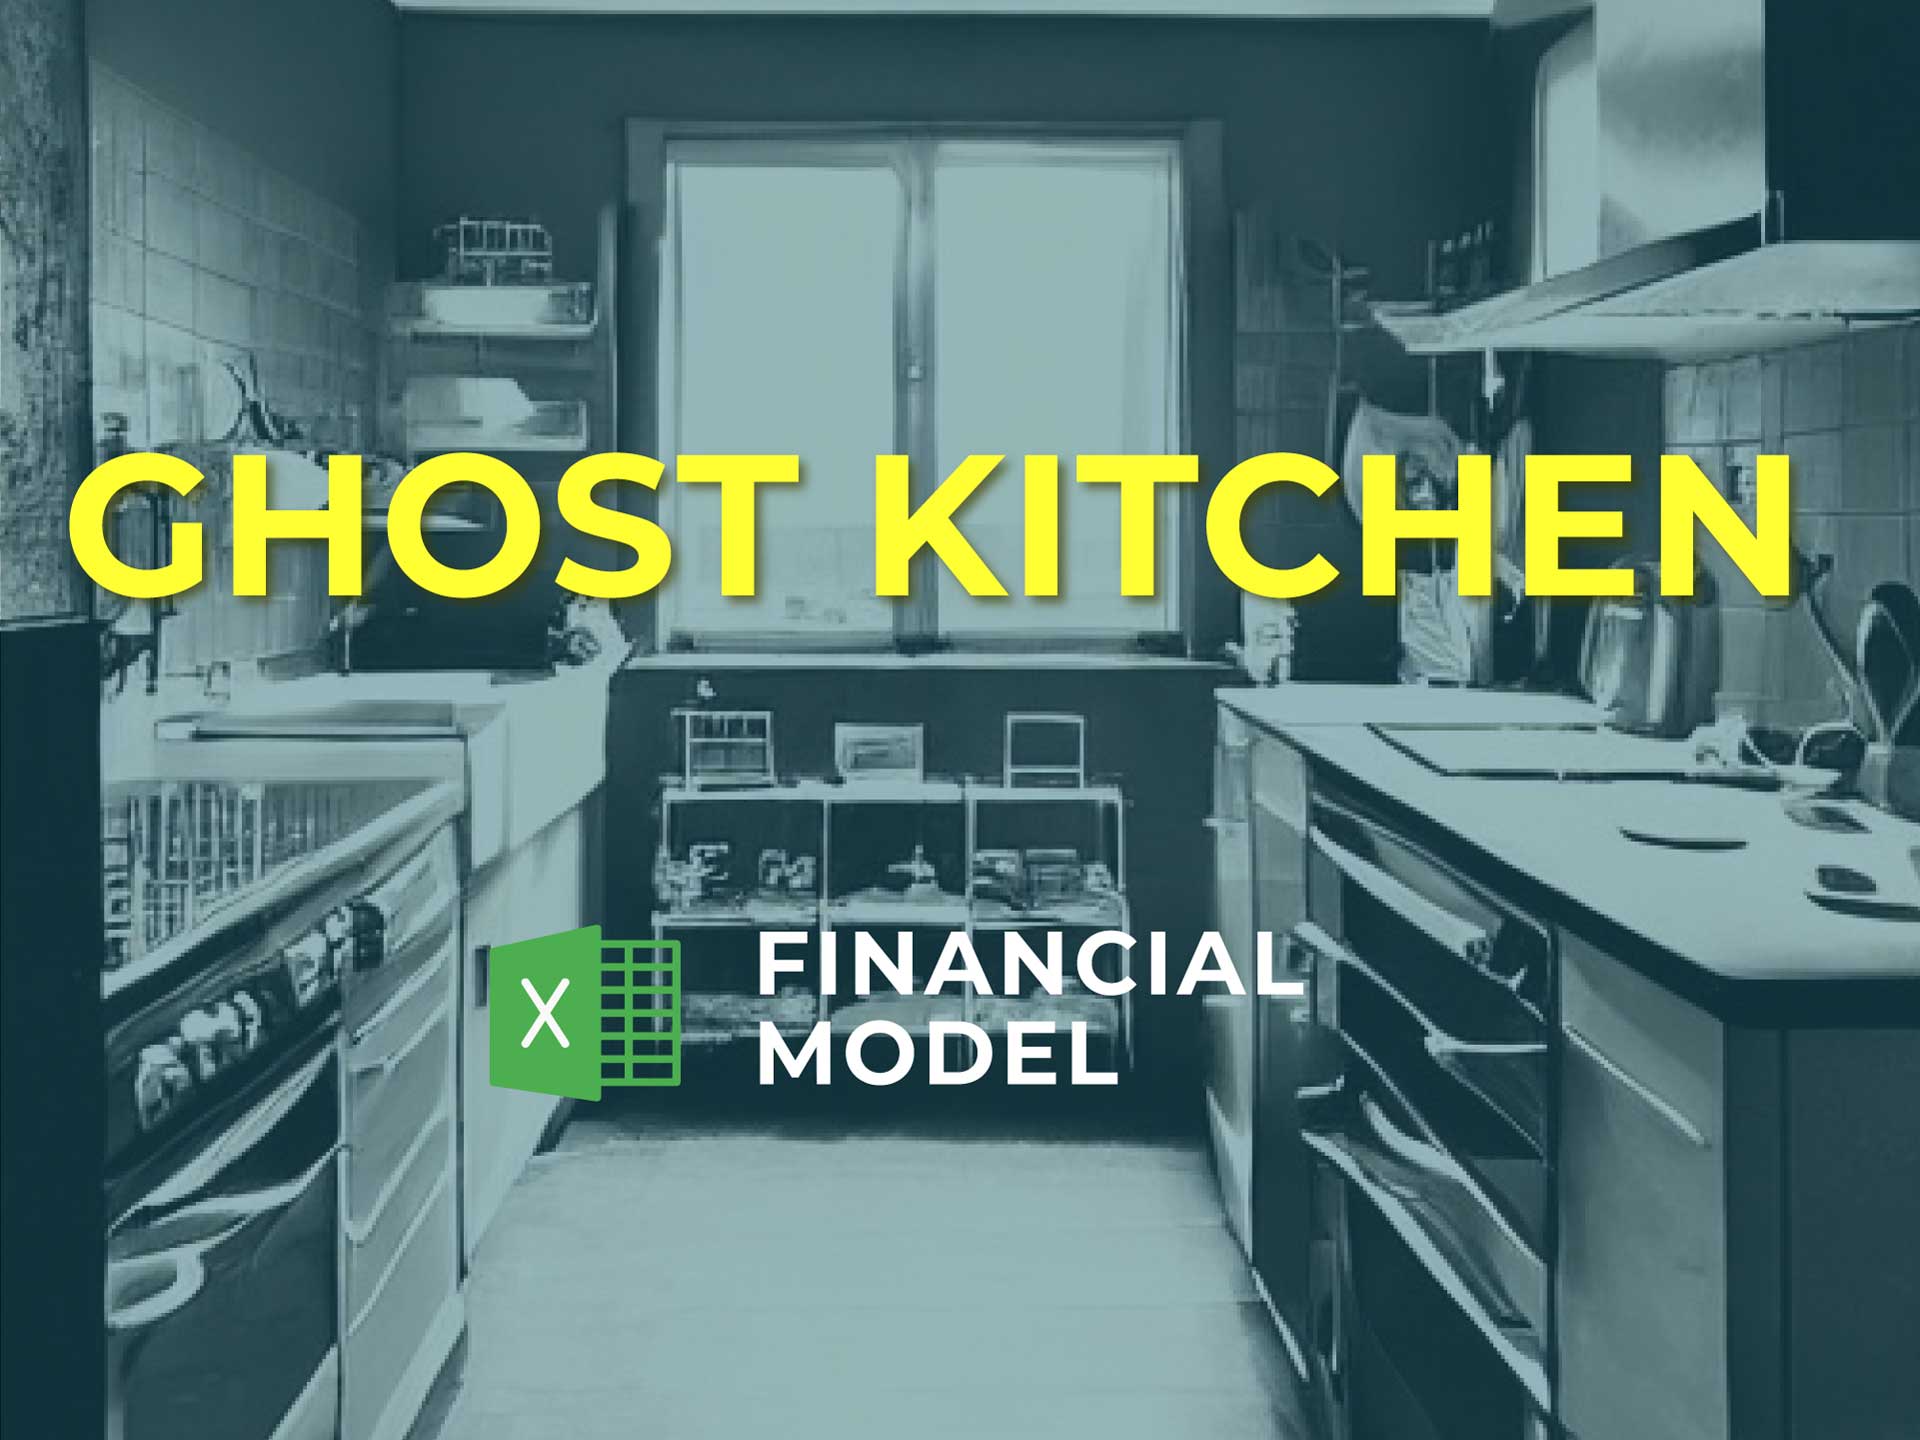 ghost kitchen business plan pdf